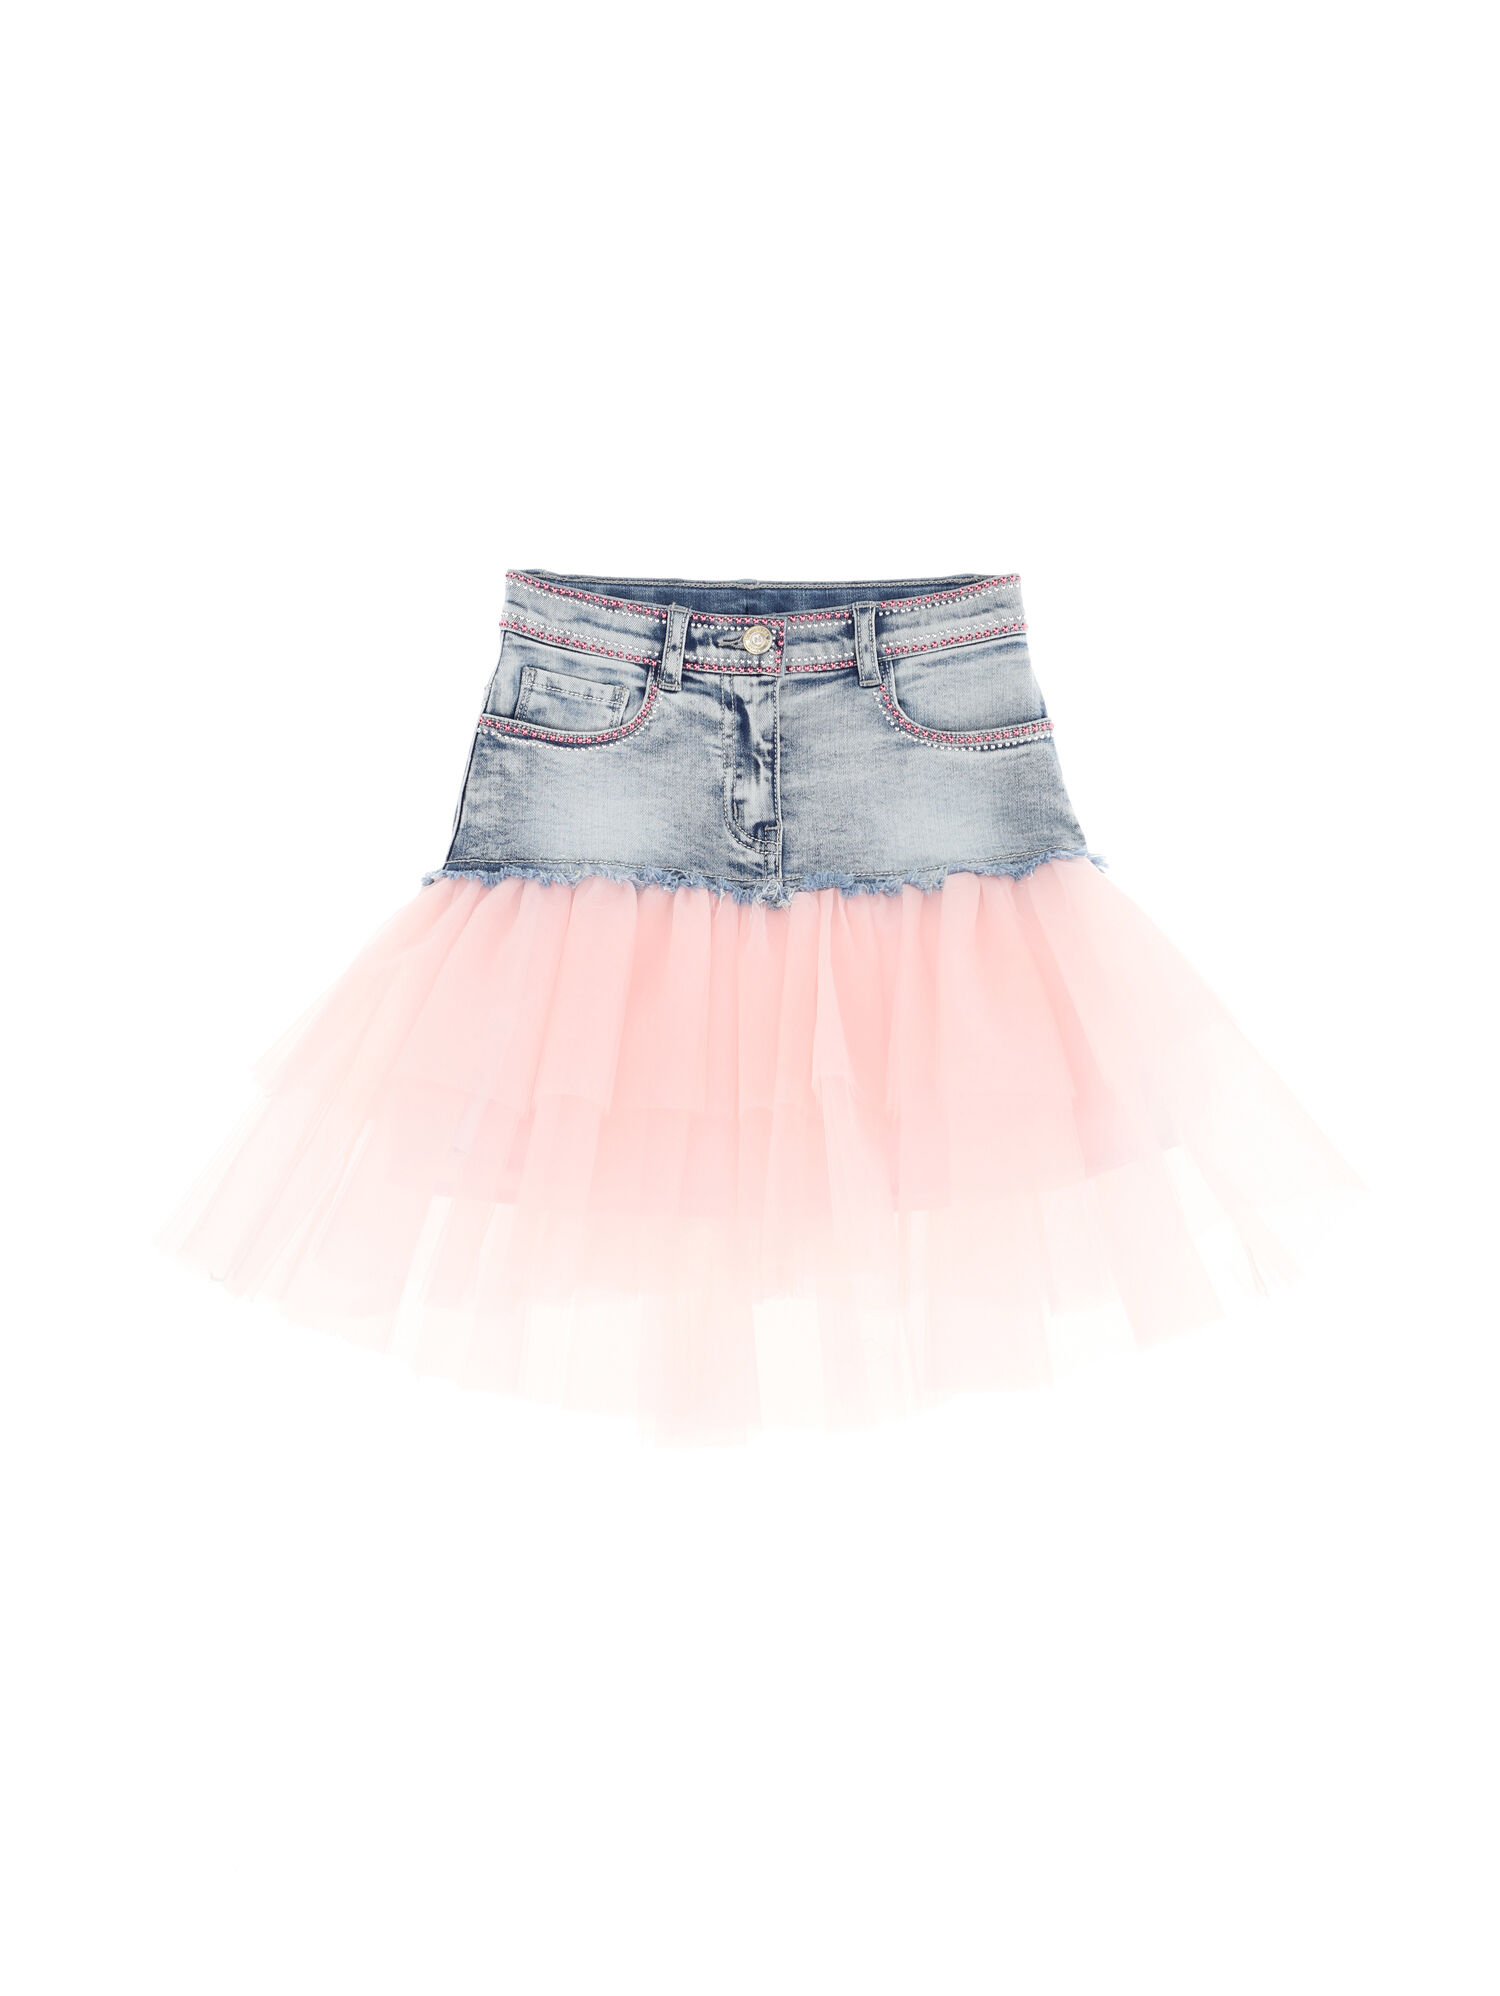 Tulle denim skirt with crystals Monnalisa Girls Clothing Skirts Denim Skirts 